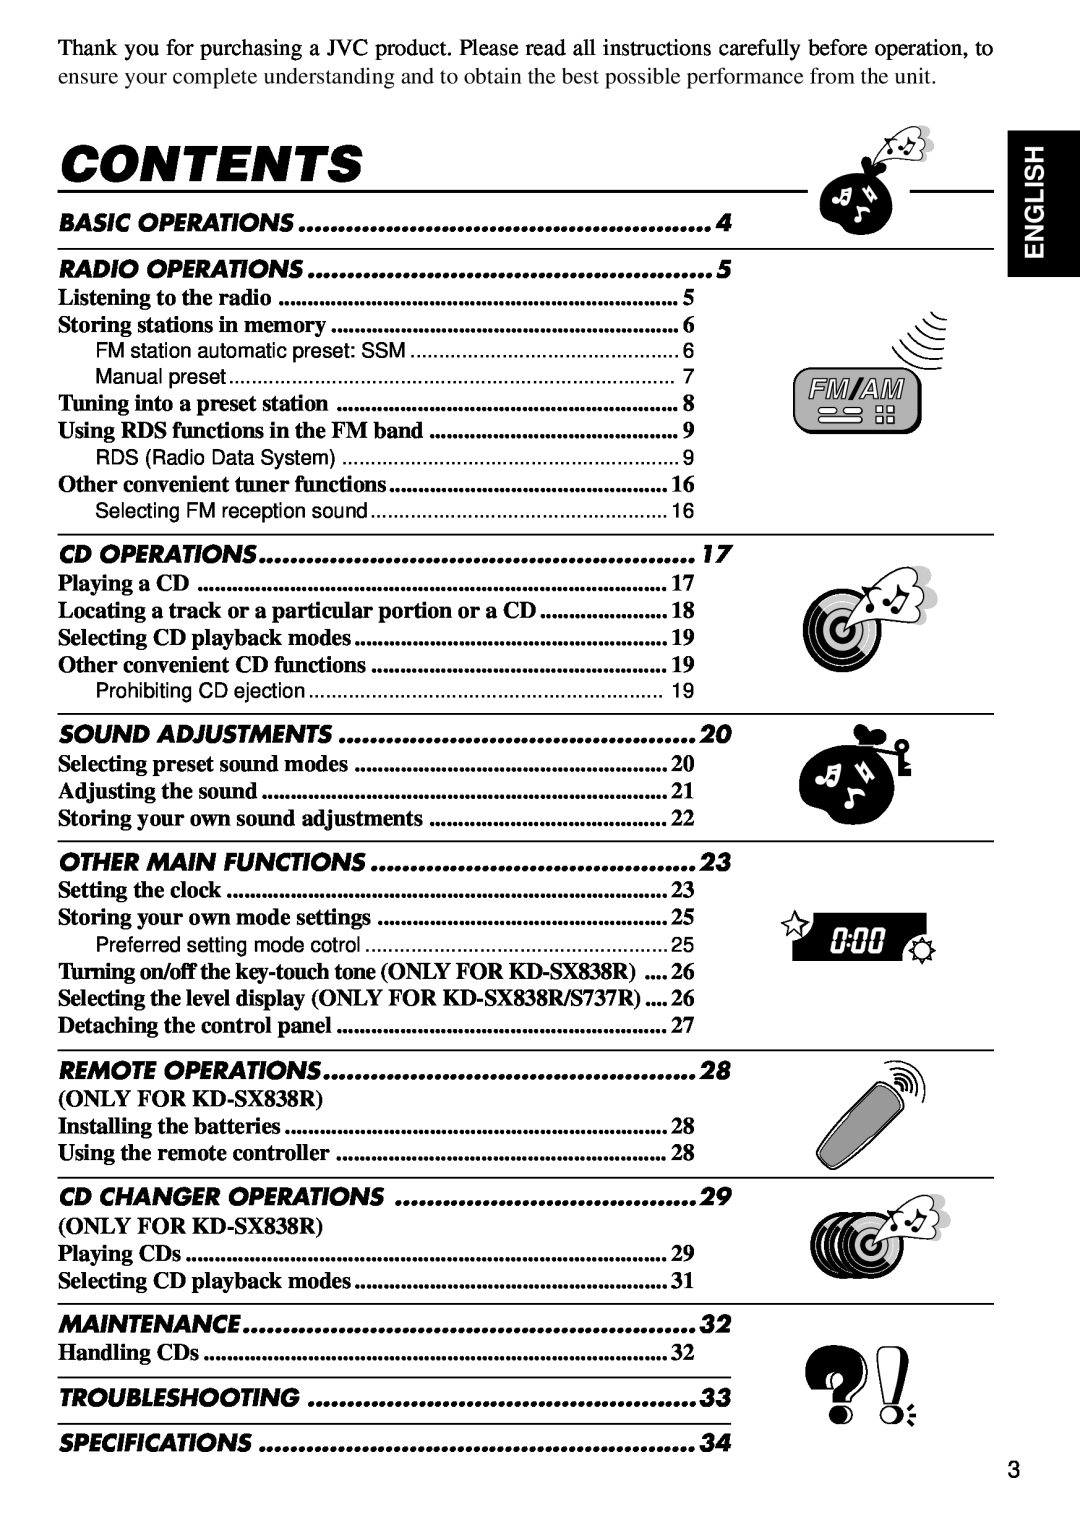 JVC KD-S737R, KD-SX838R, KD-S707R manual Contents, English 